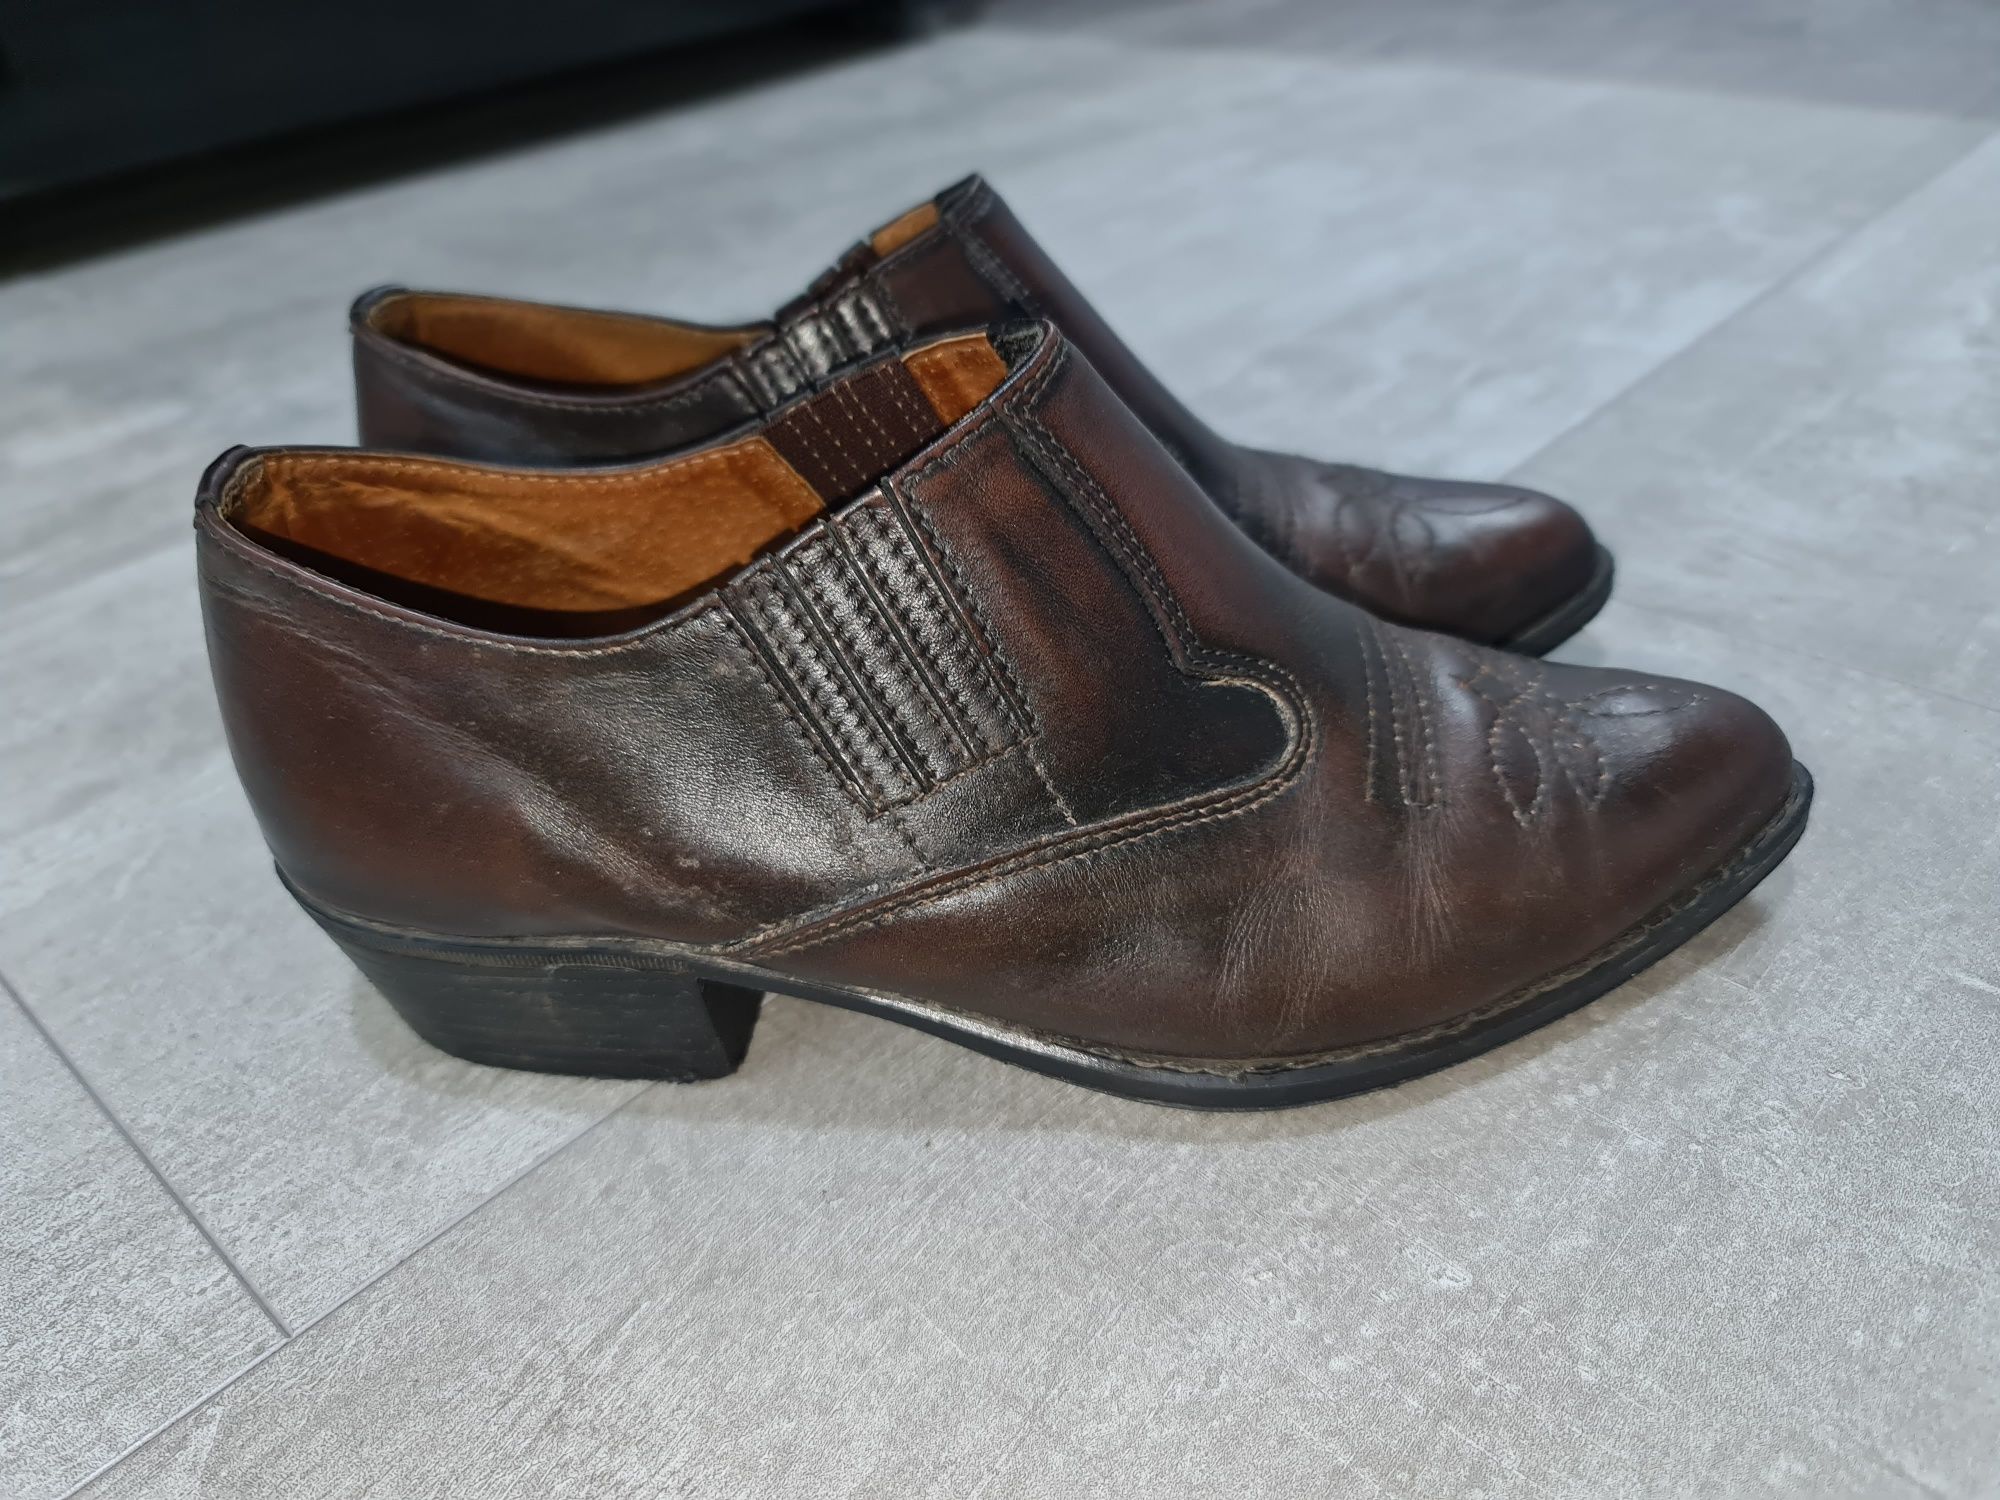 Western pantofle skórzane męskie r. 39